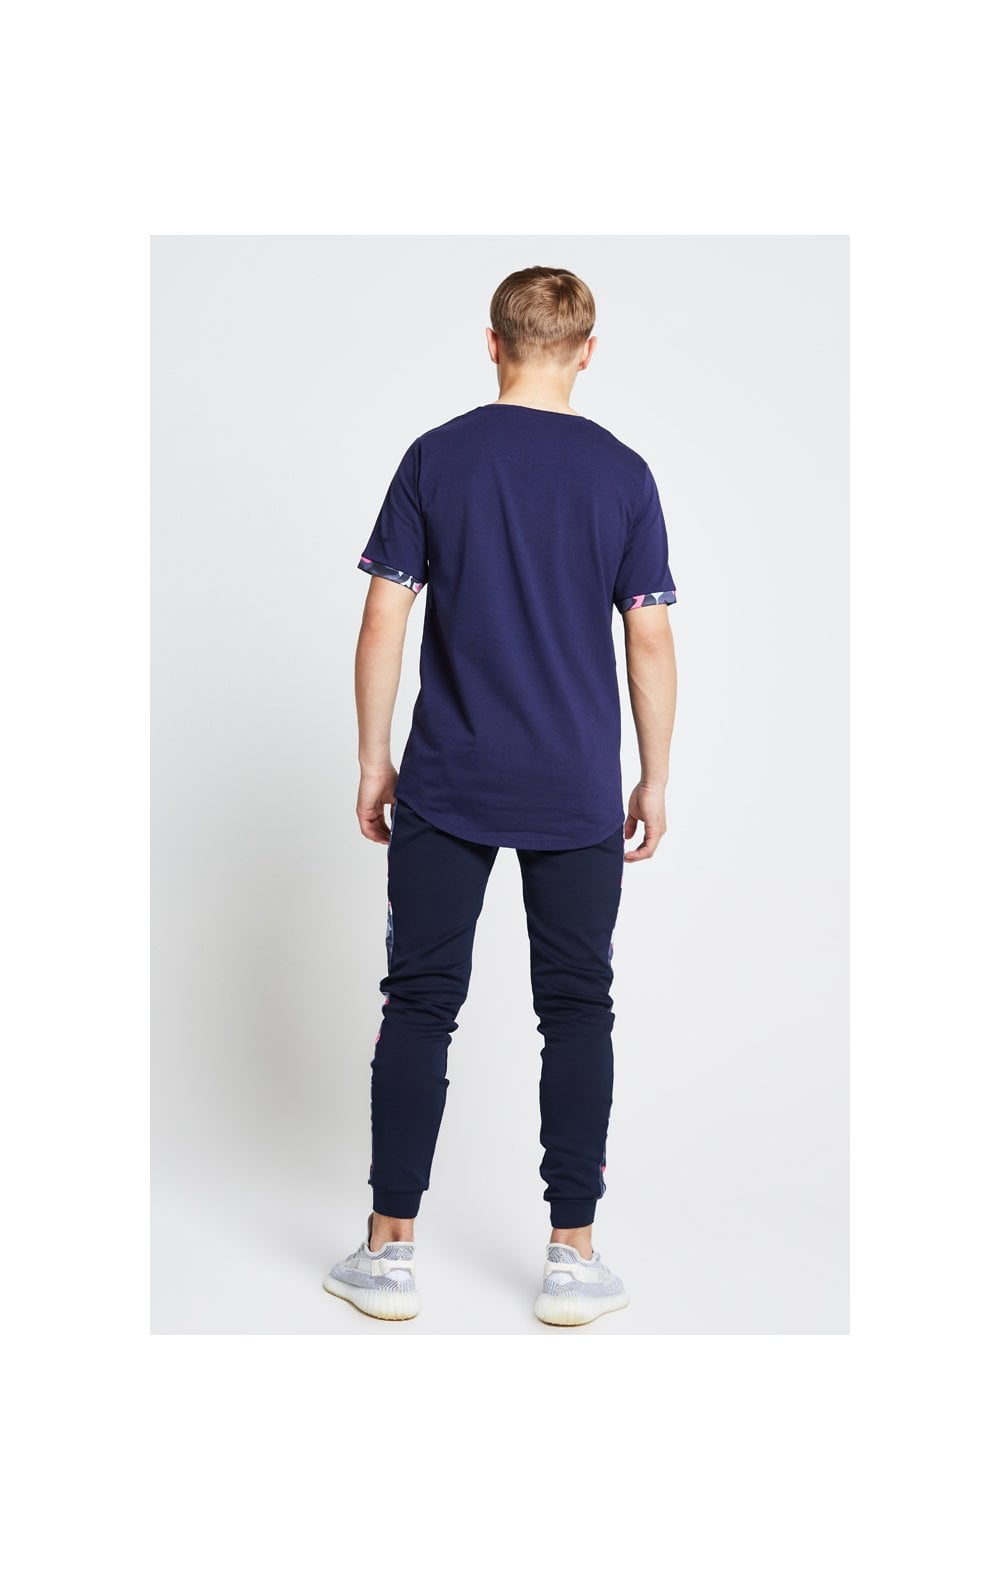 Illusive London T-Shirt Kontrast Saum - Marineblau und Neon Rosa Camouflage (6)